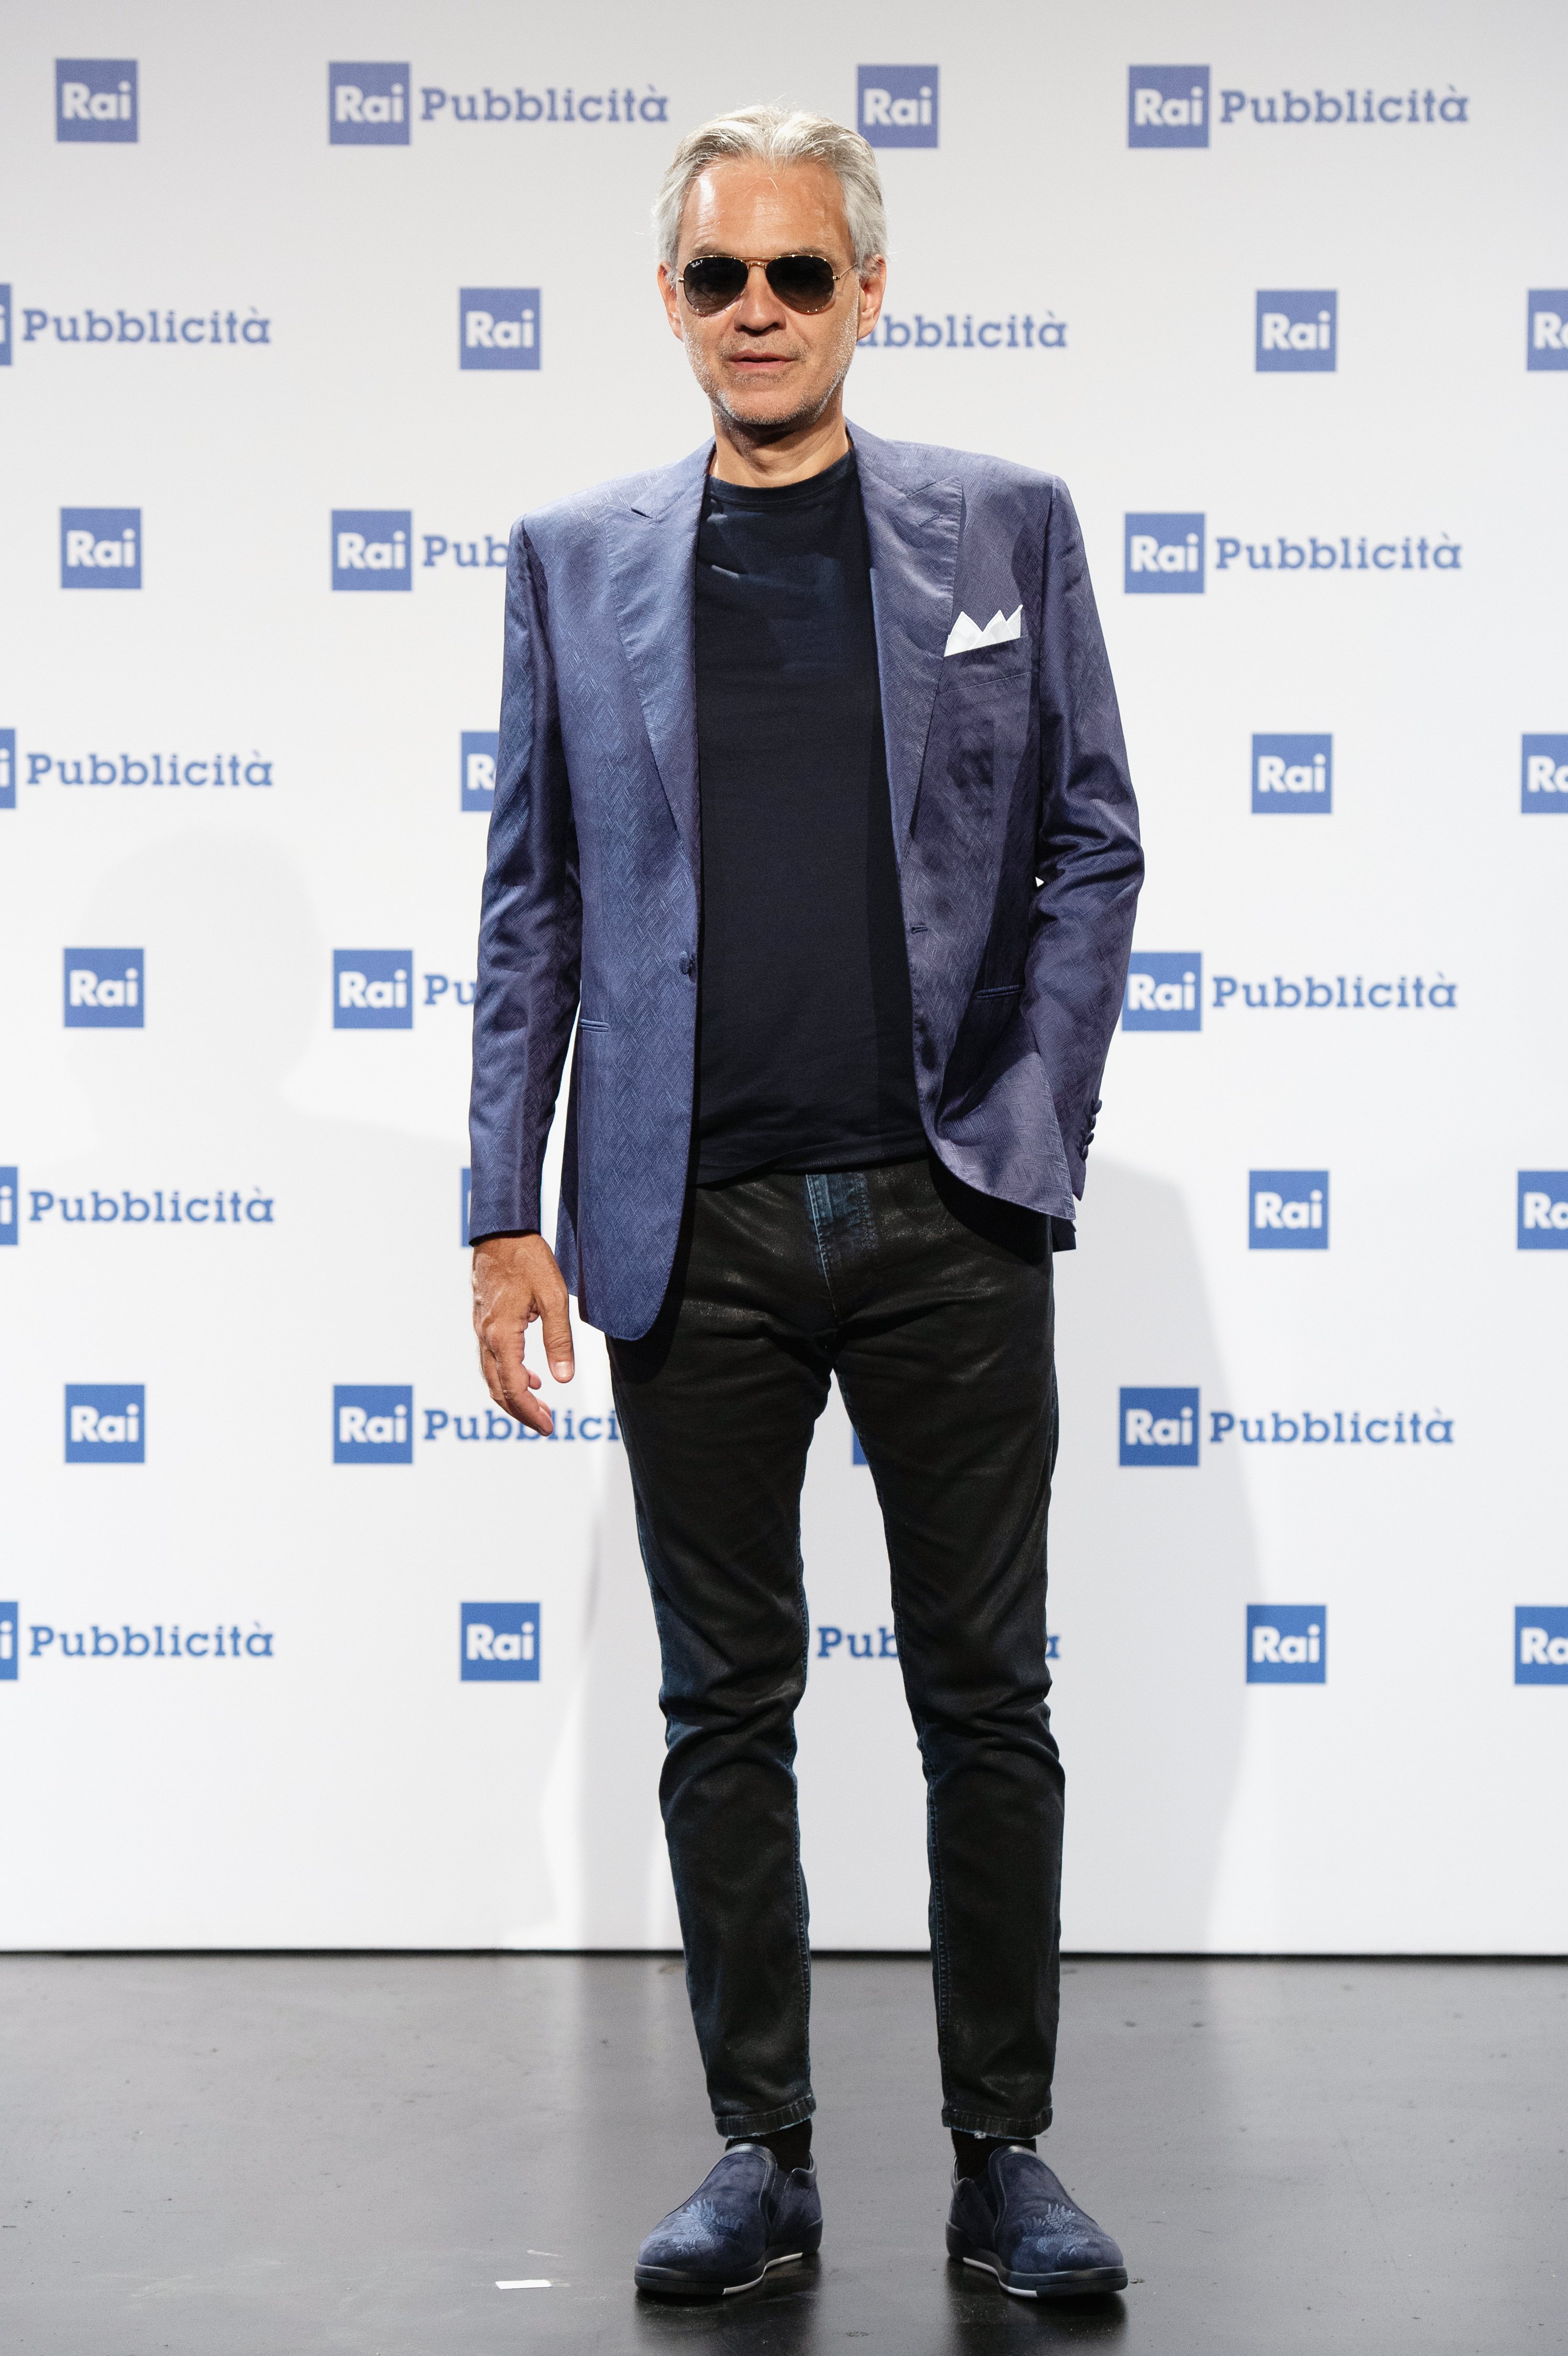 Andrea Bocelli attends the RAI program presentation in Milan. Photo: Getty Images/GlobalImagesUkraine